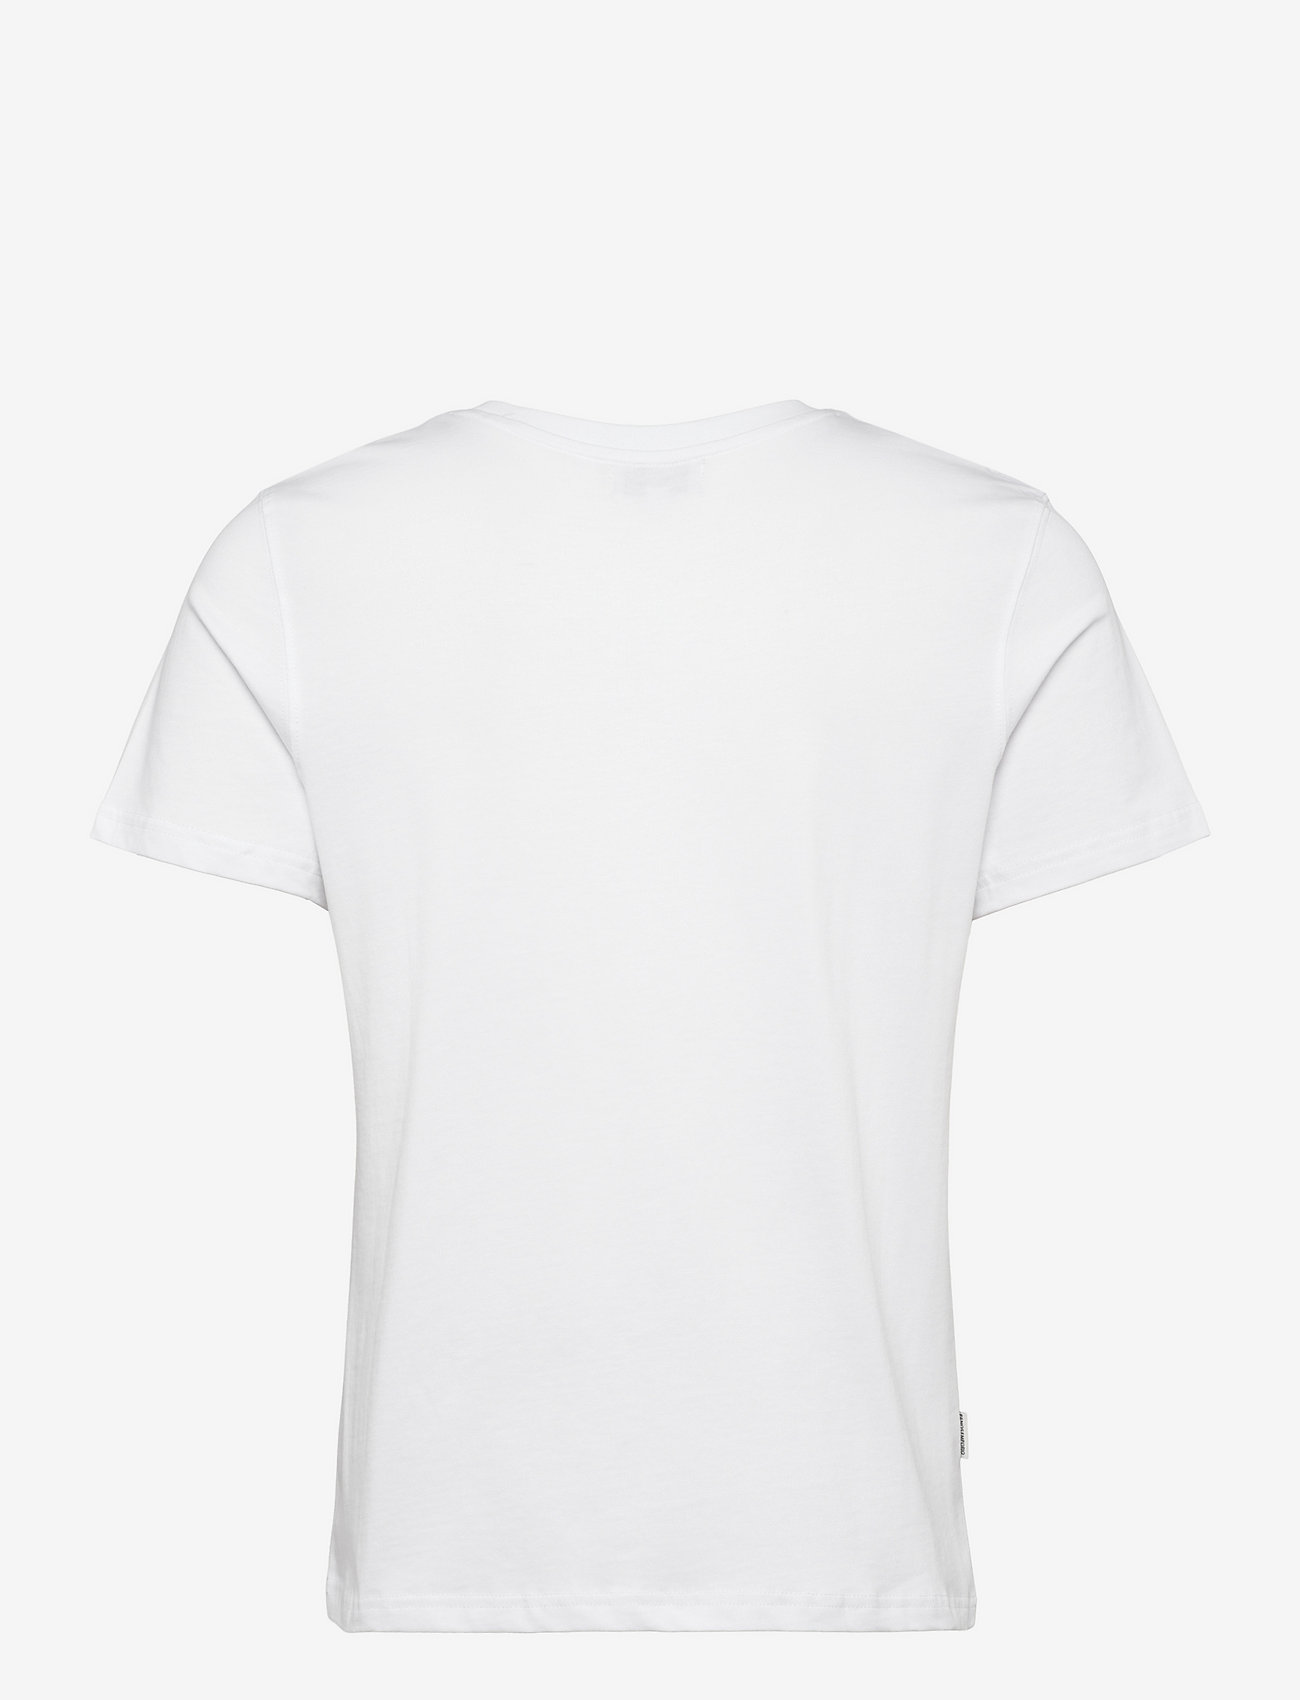 Panos Emporio - PANOS EMPORIO ELEMENT TEE - t-shirts - white - 1